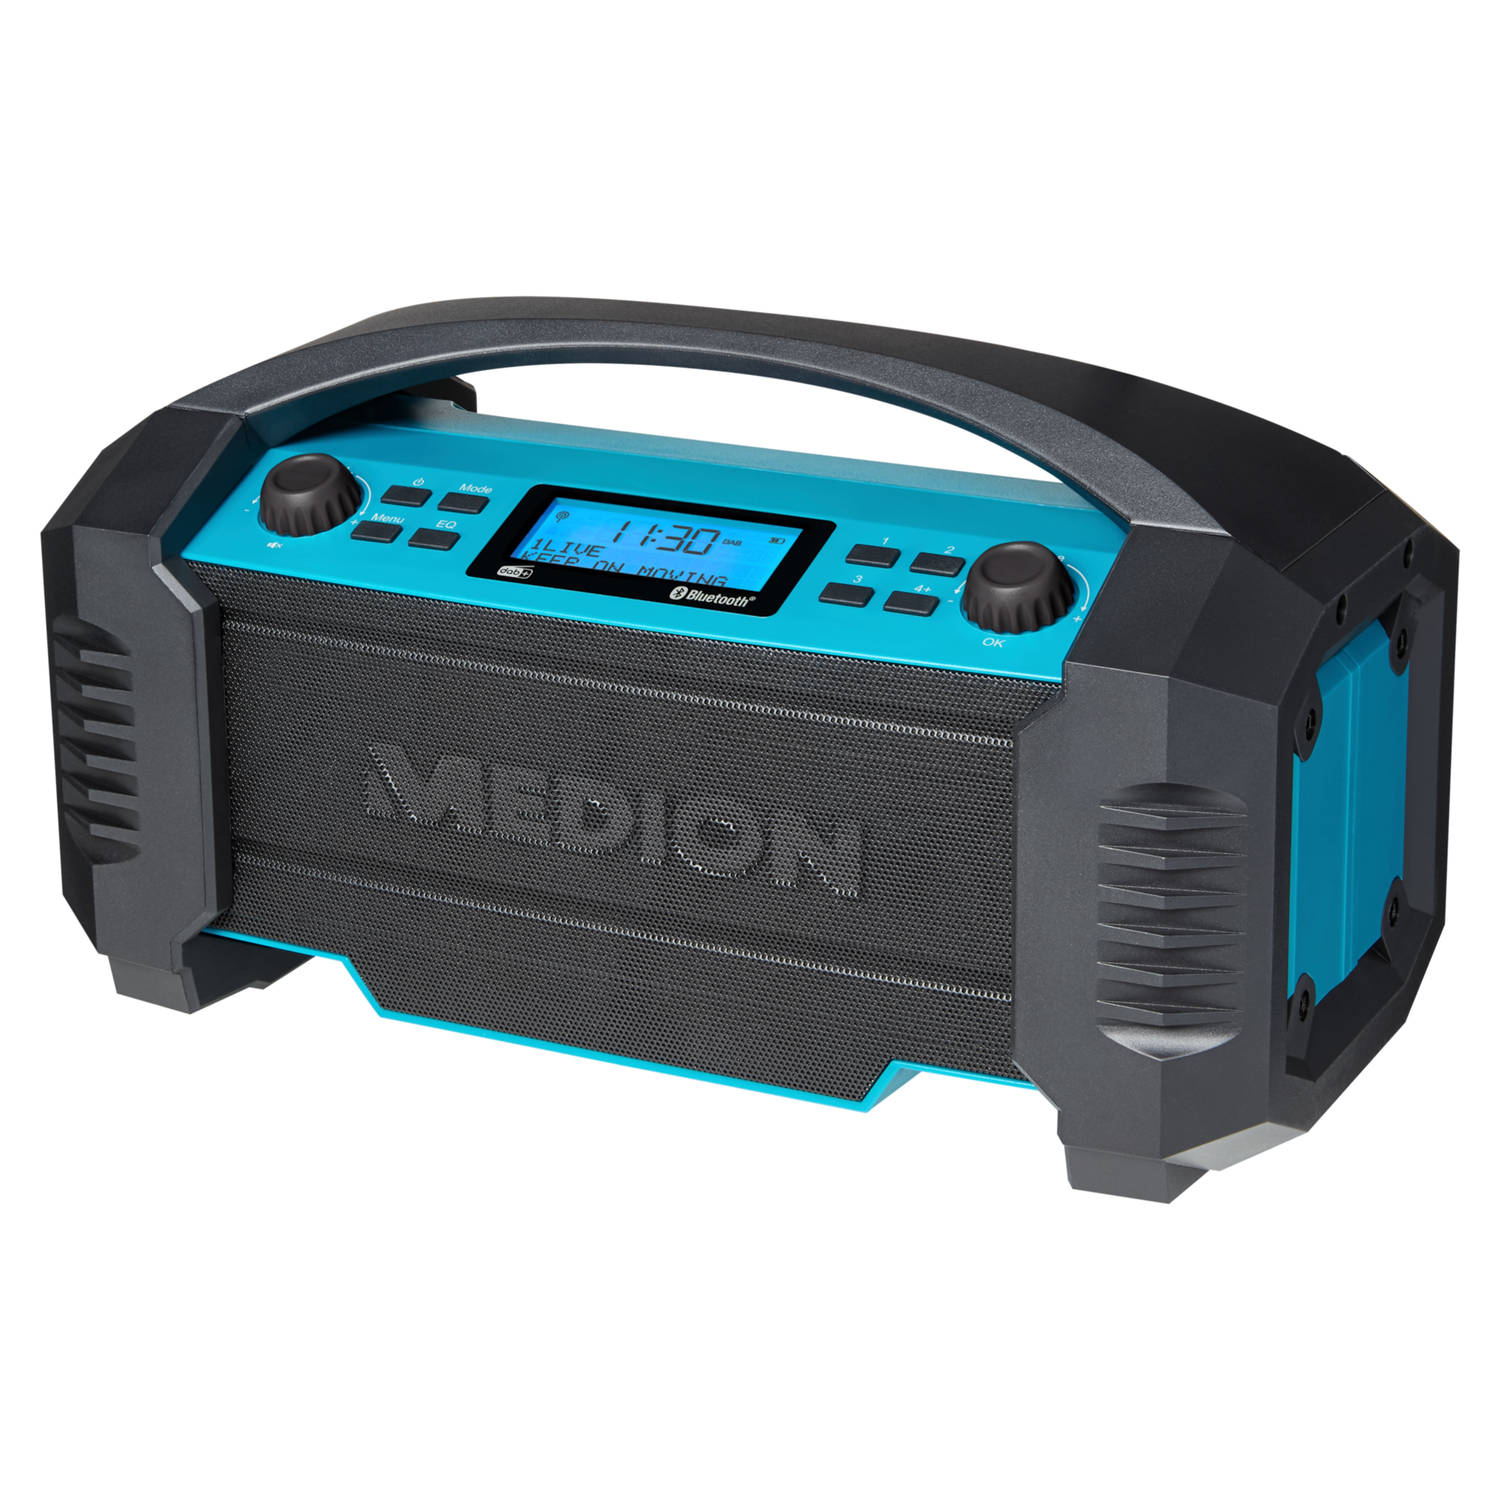 Bouwradio Dab+ Medion E66050 Fm -Bluetooth Stof-spatwater Bescherming (Ip54) Robuuste Behuizing 15 W